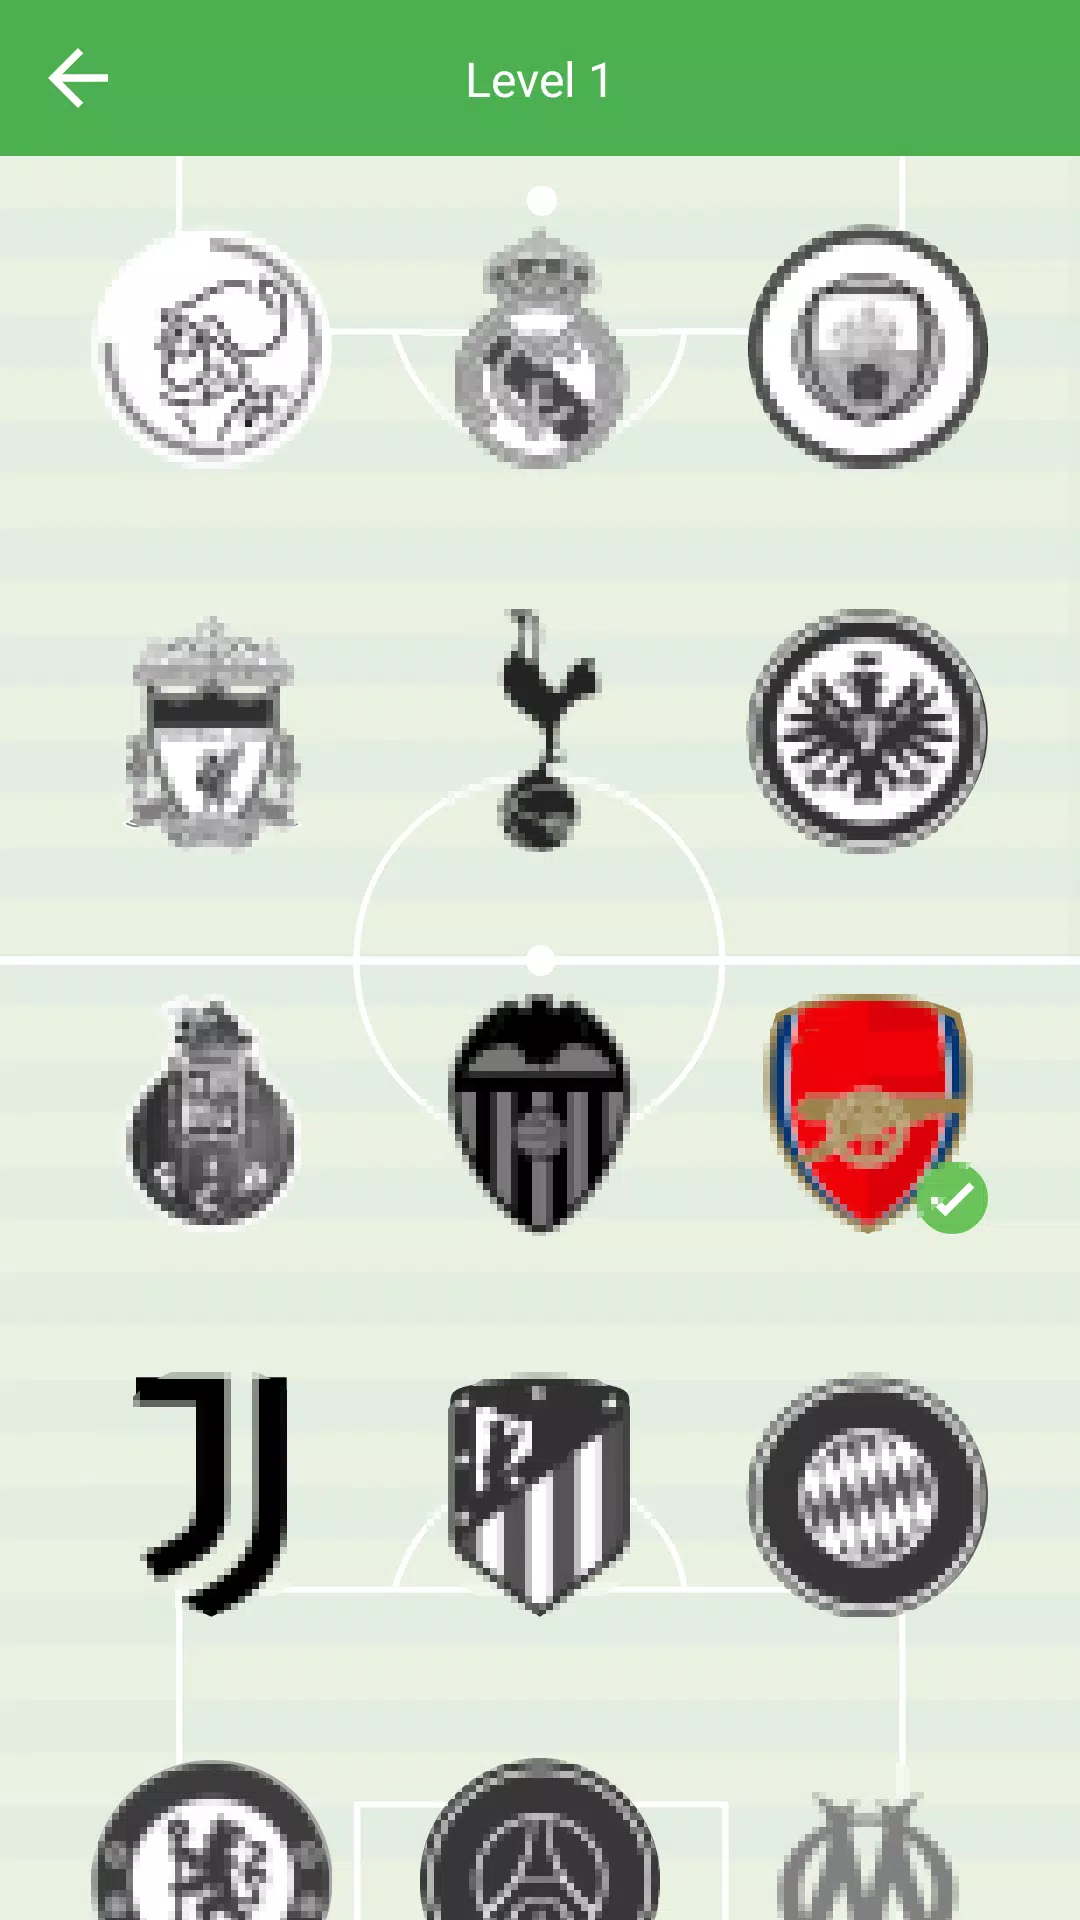 Guess the Soccer Club  Logo Quiz Game ⚽️ 